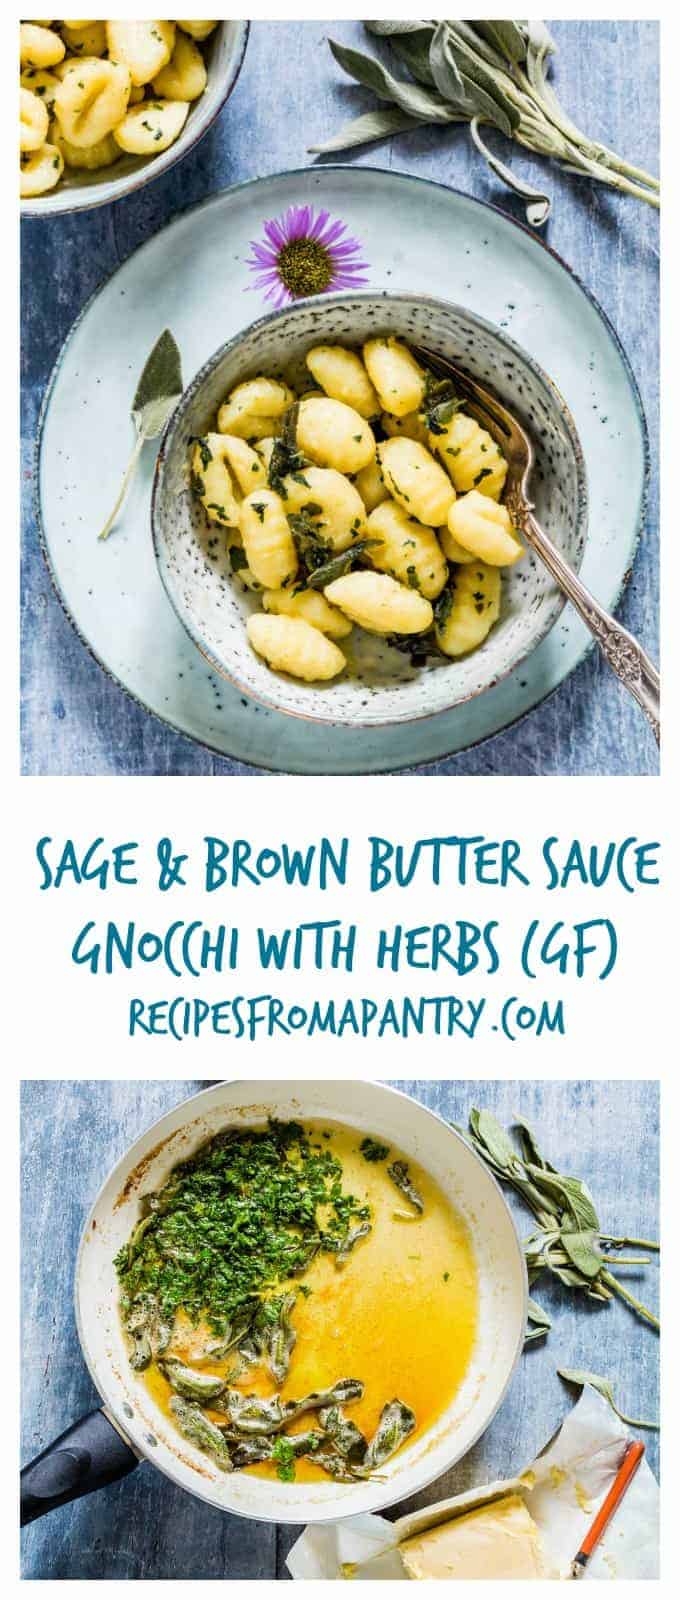 brown butter sage sauce